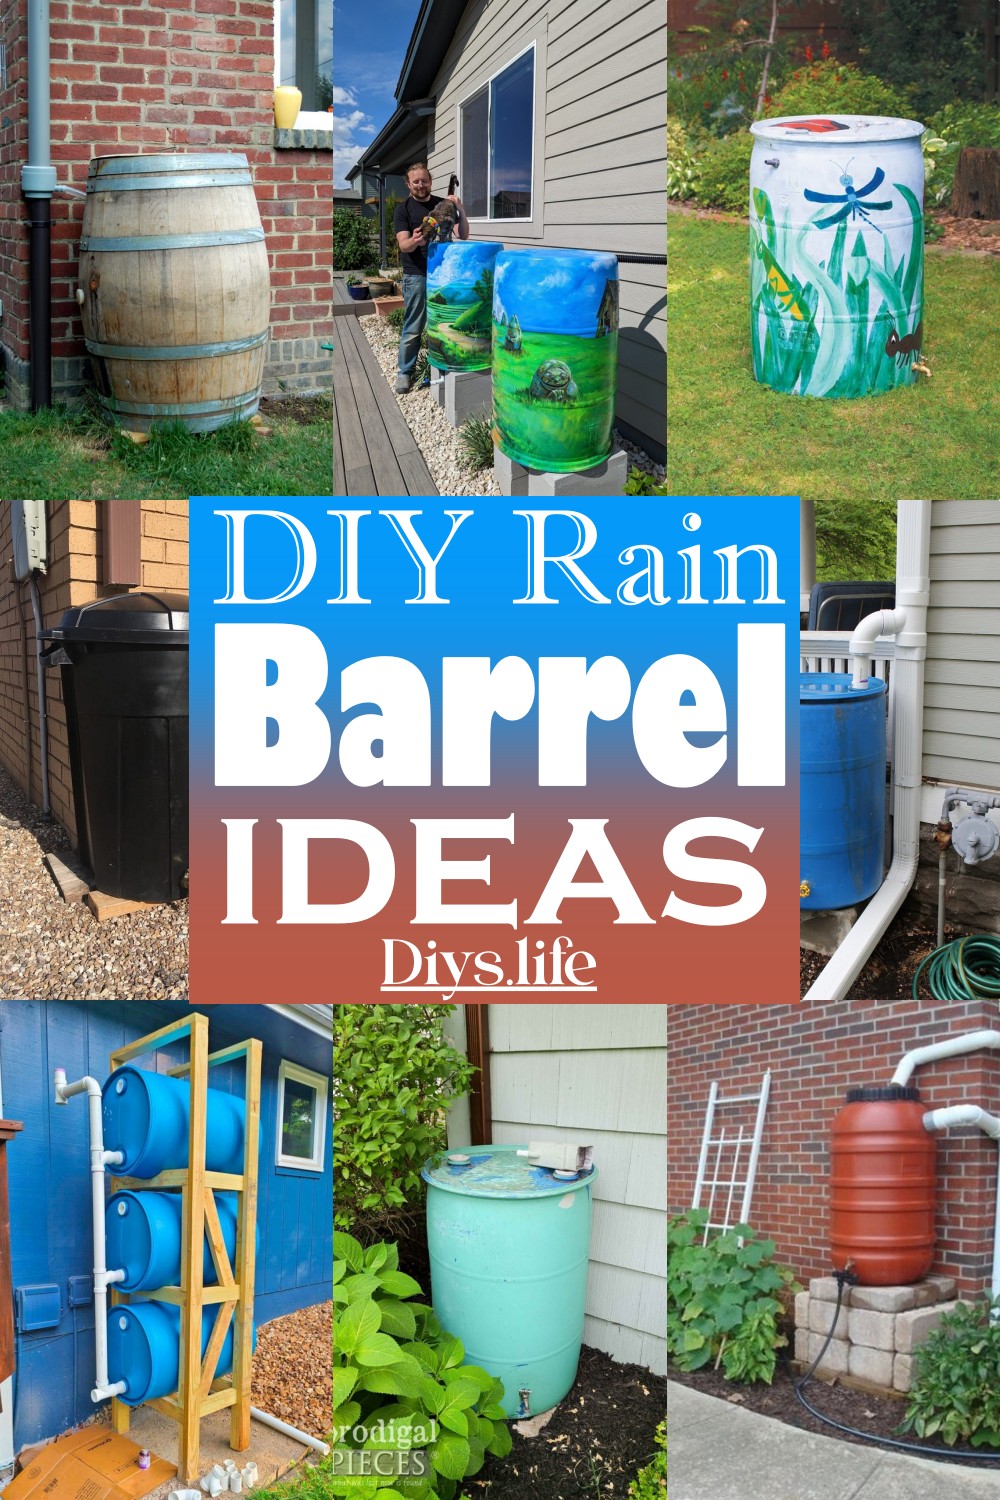 DIY Rain Barrel ideas 1